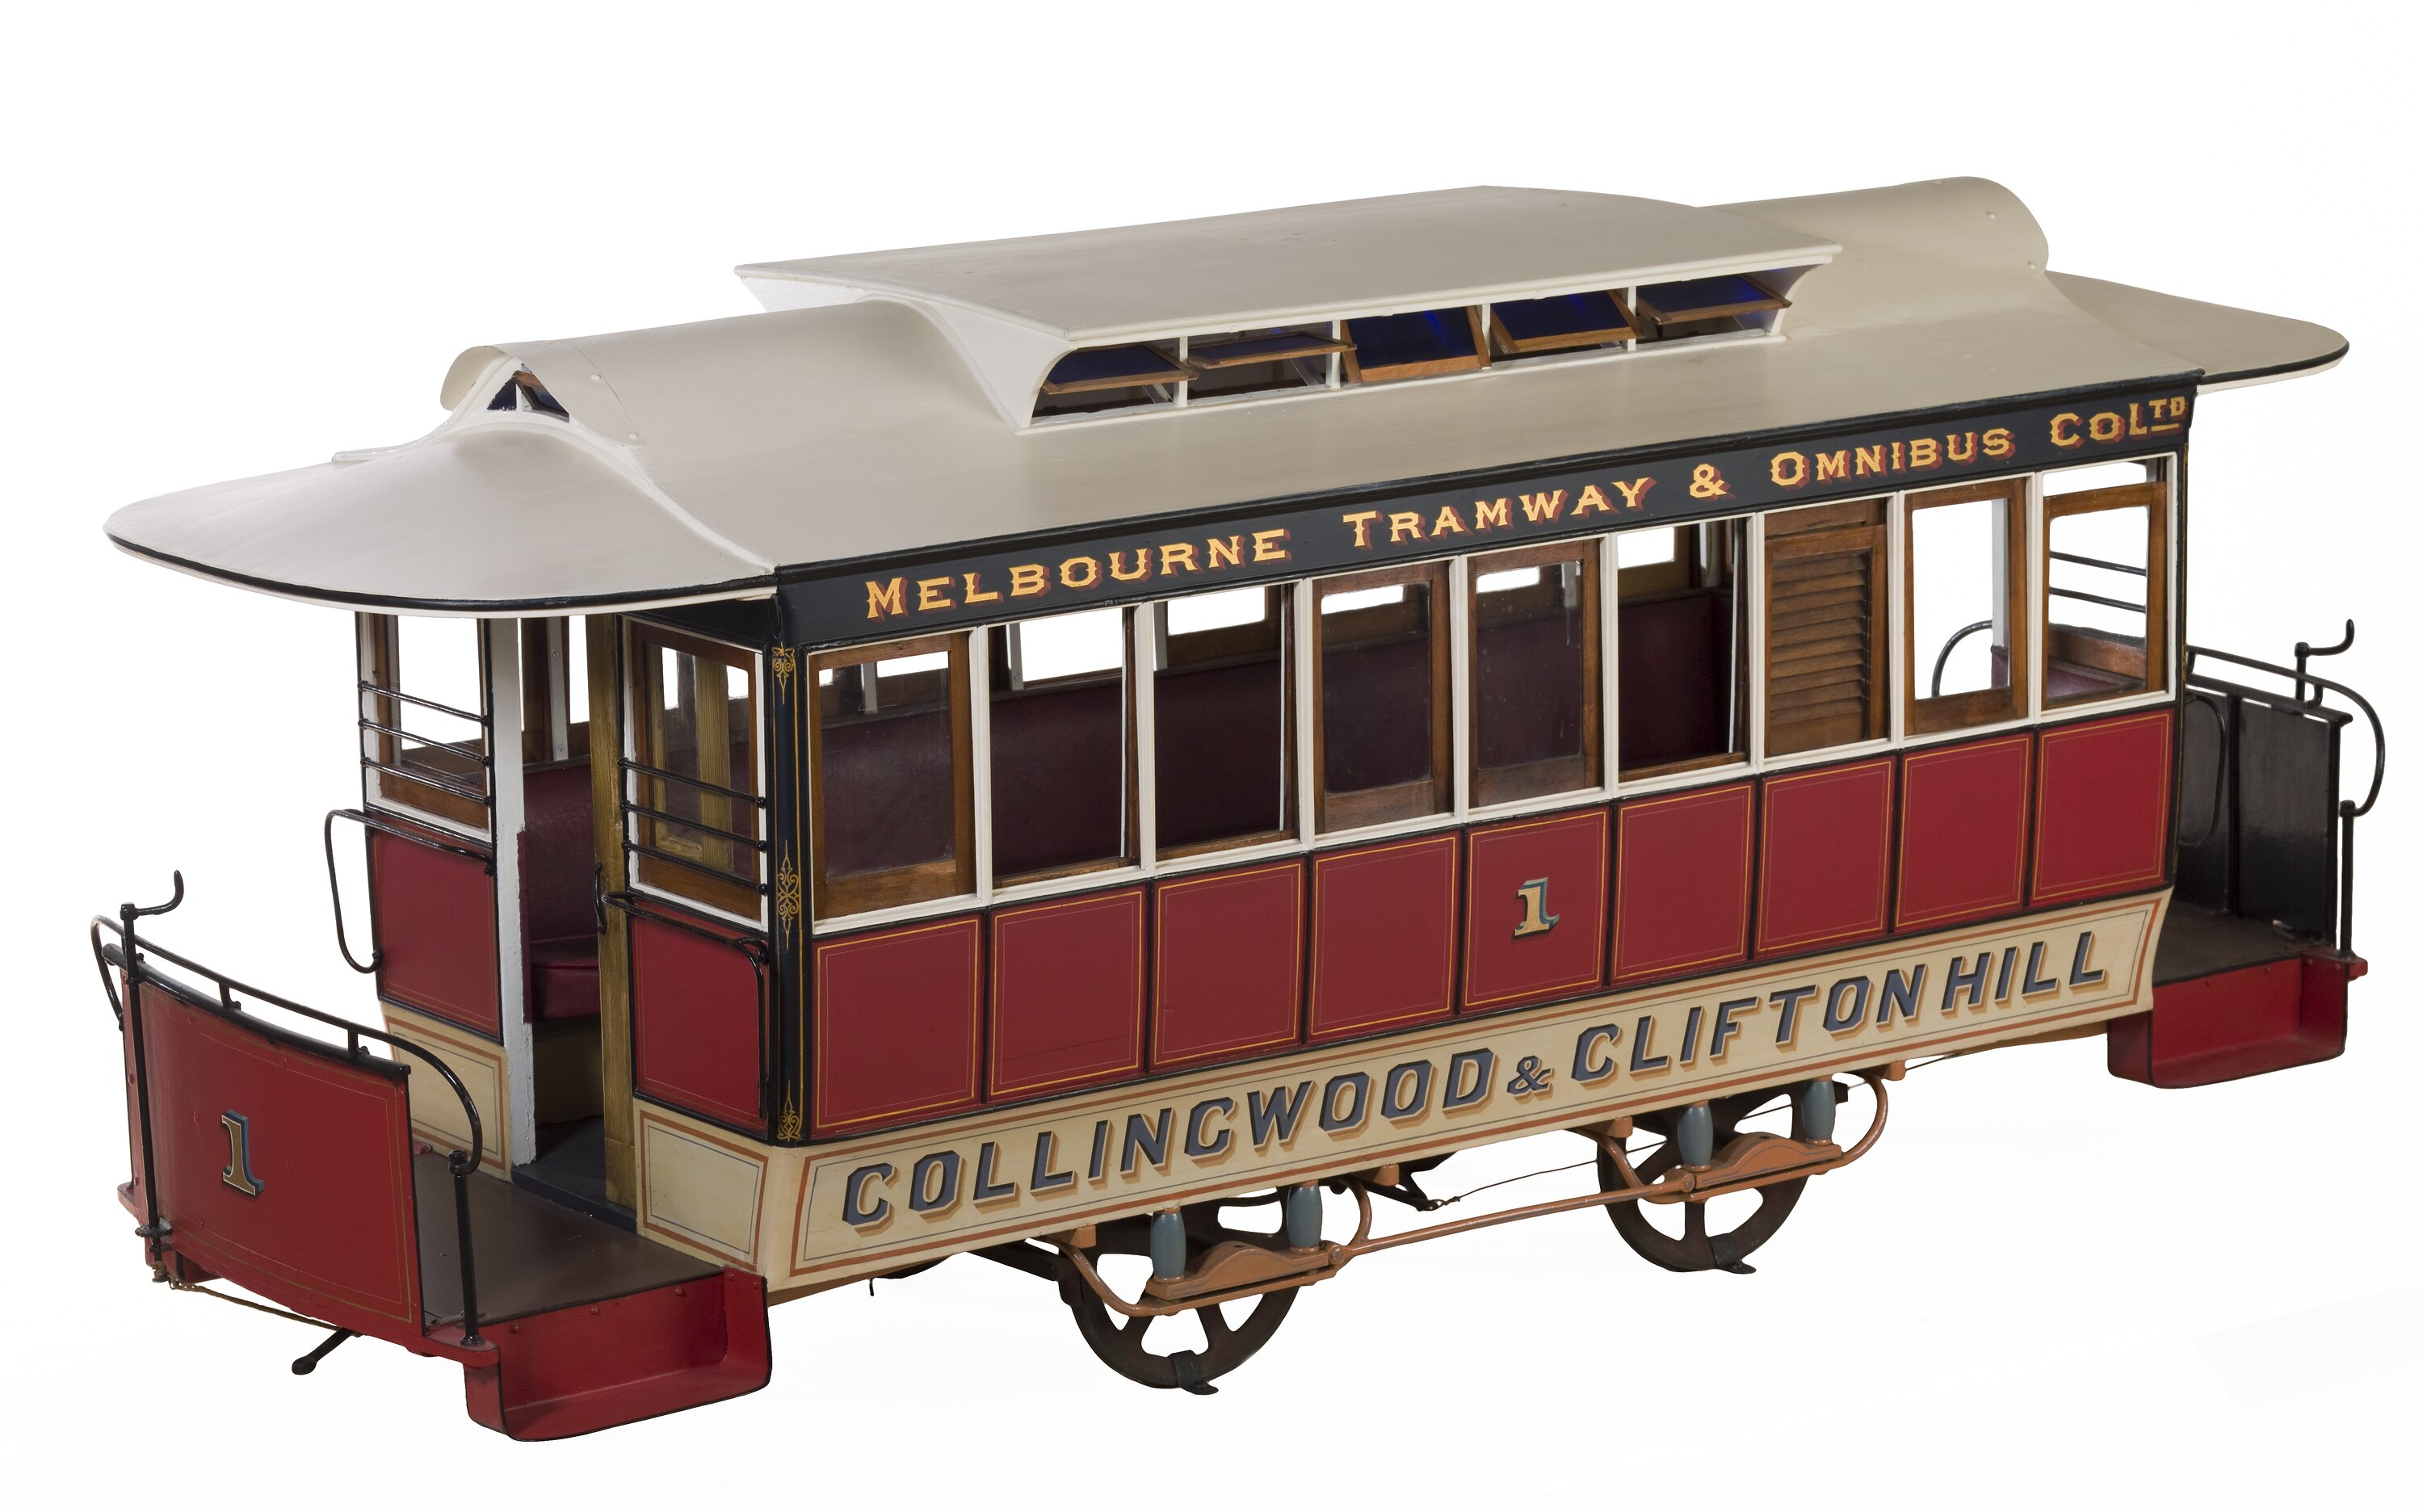 Cable Tram Model, Collingwood & Clifton Hill Route, Melbourne